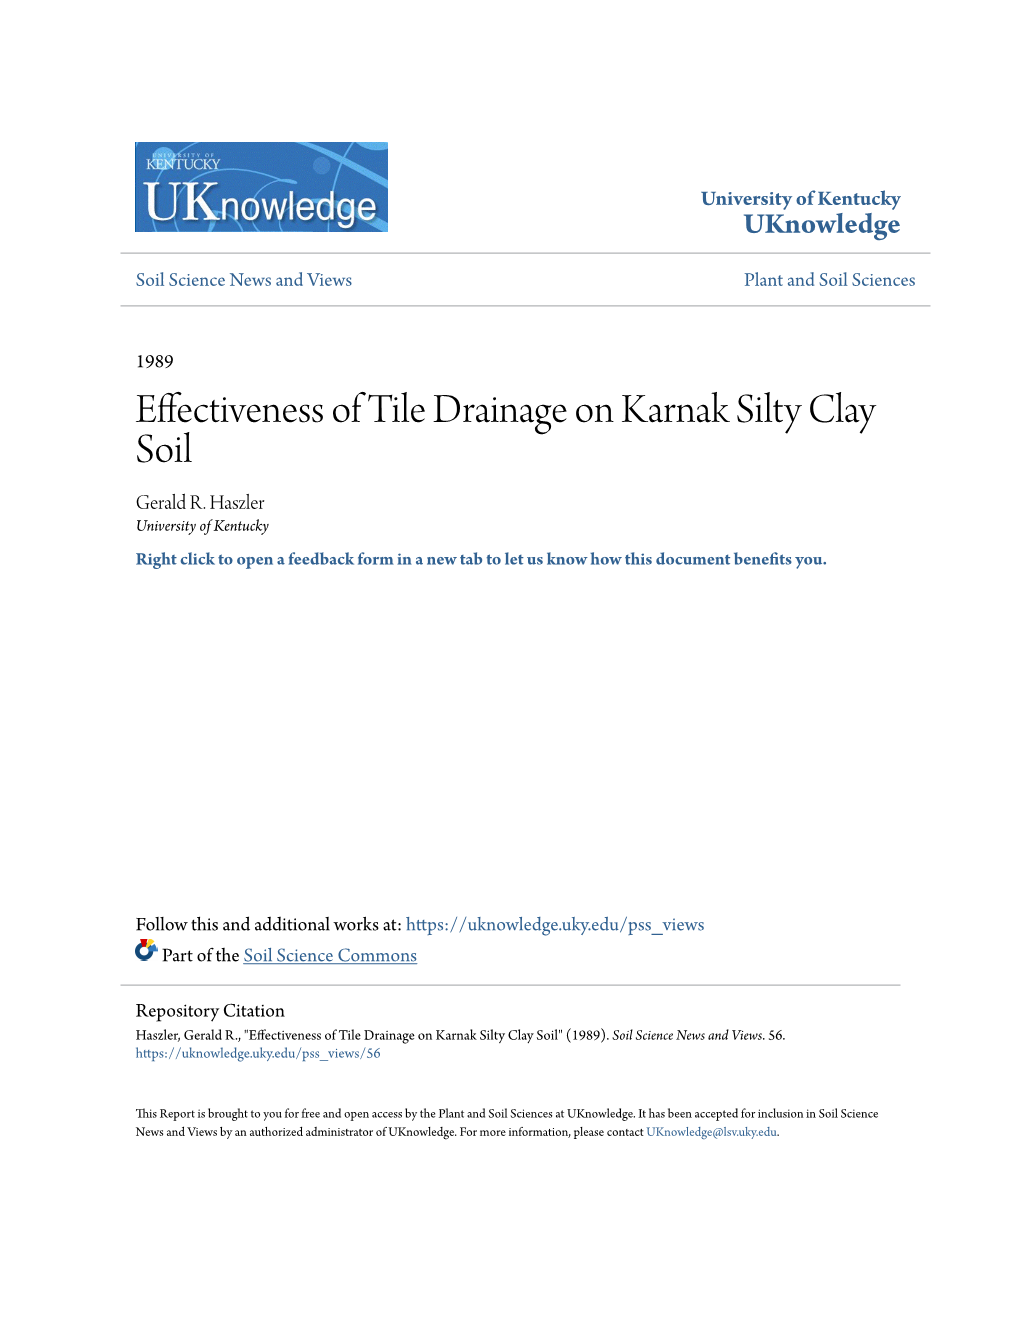 Effectiveness of Tile Drainage on Karnak Silty Clay Soil Gerald R